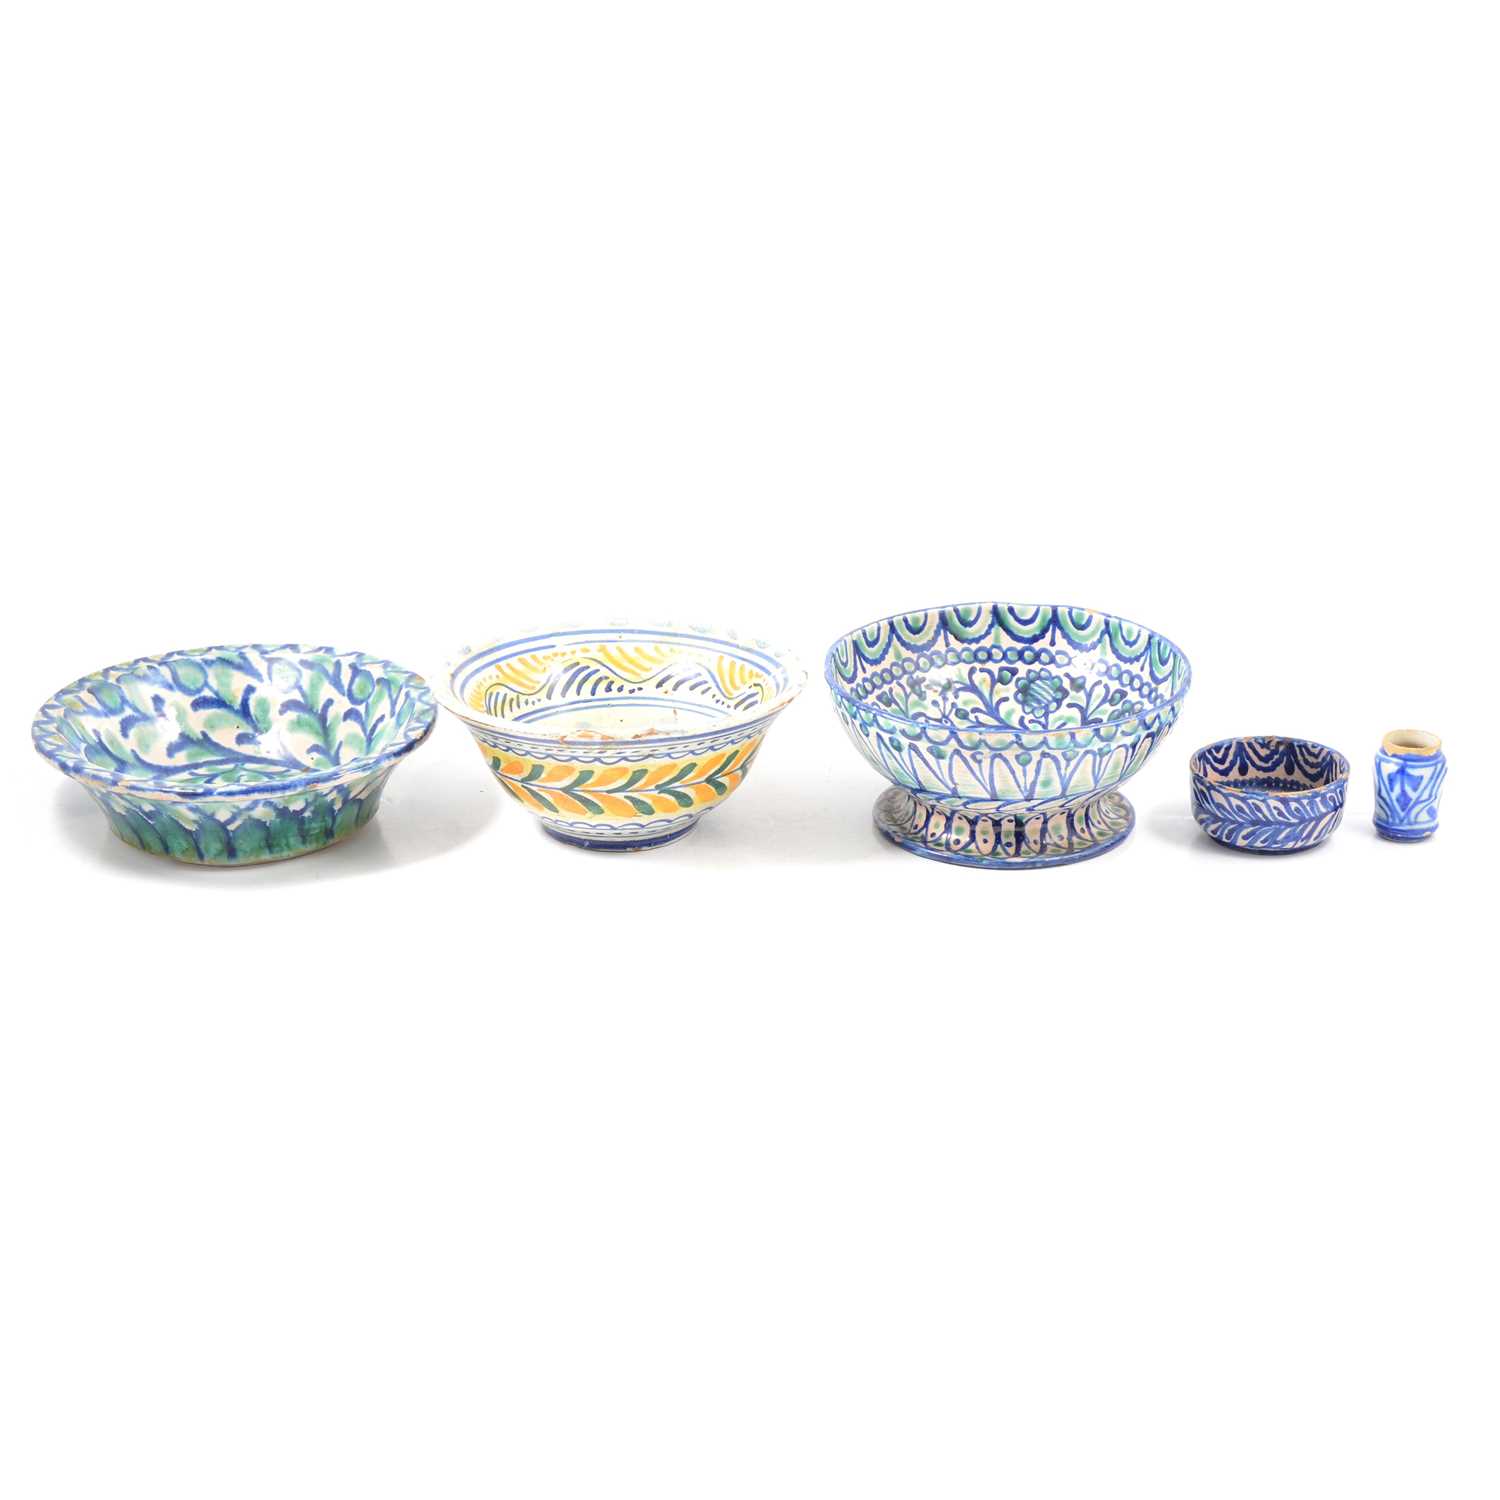 Lot 46 - A majolica bowl and Turkish earthenware bowls